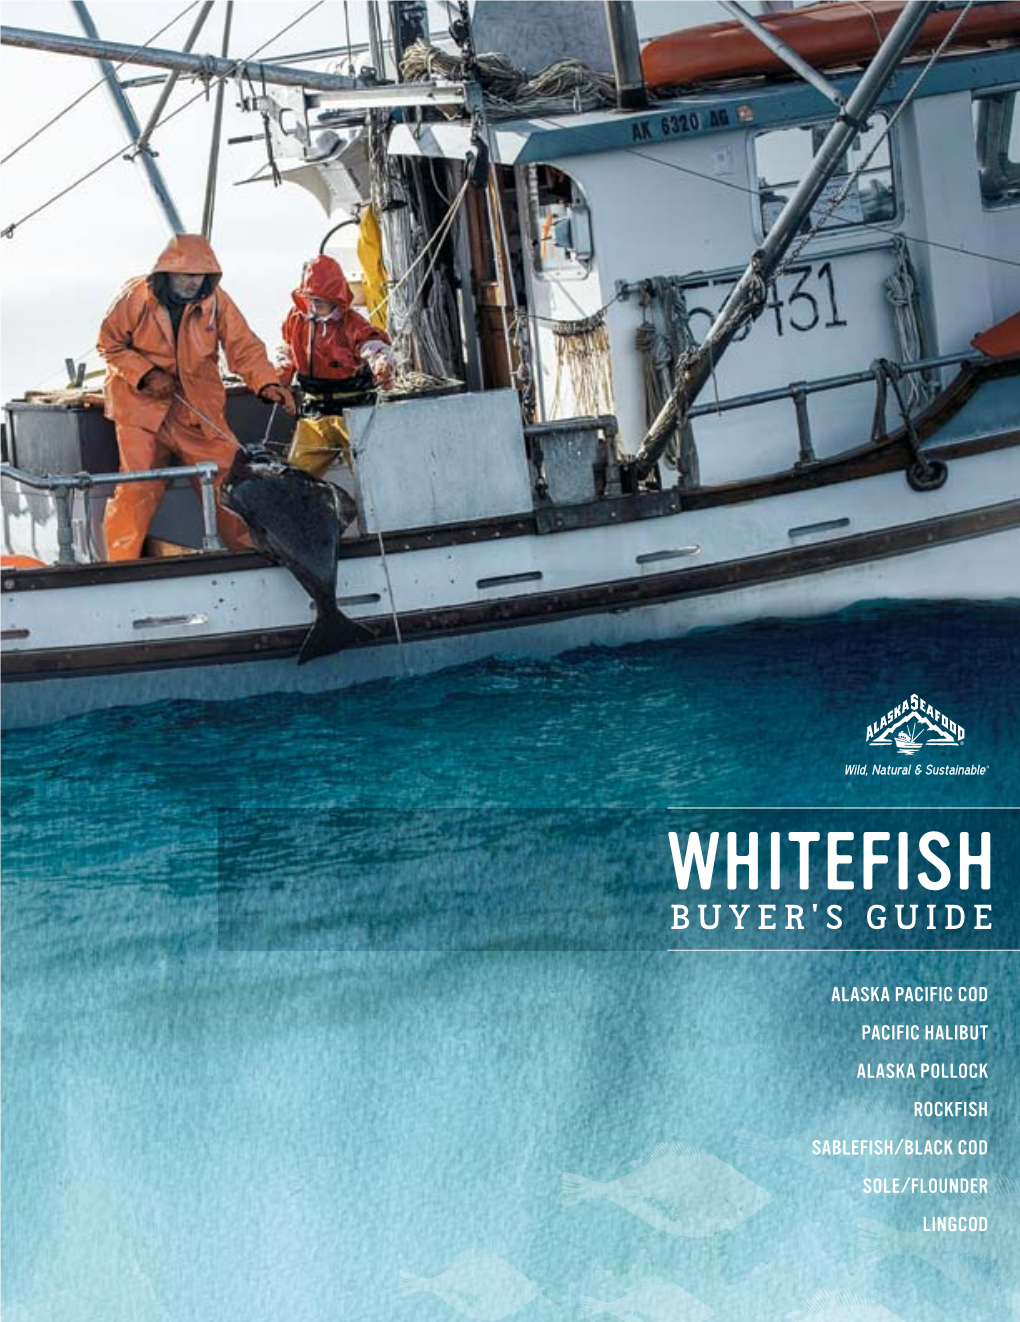 Whitefish Buyer's Guide